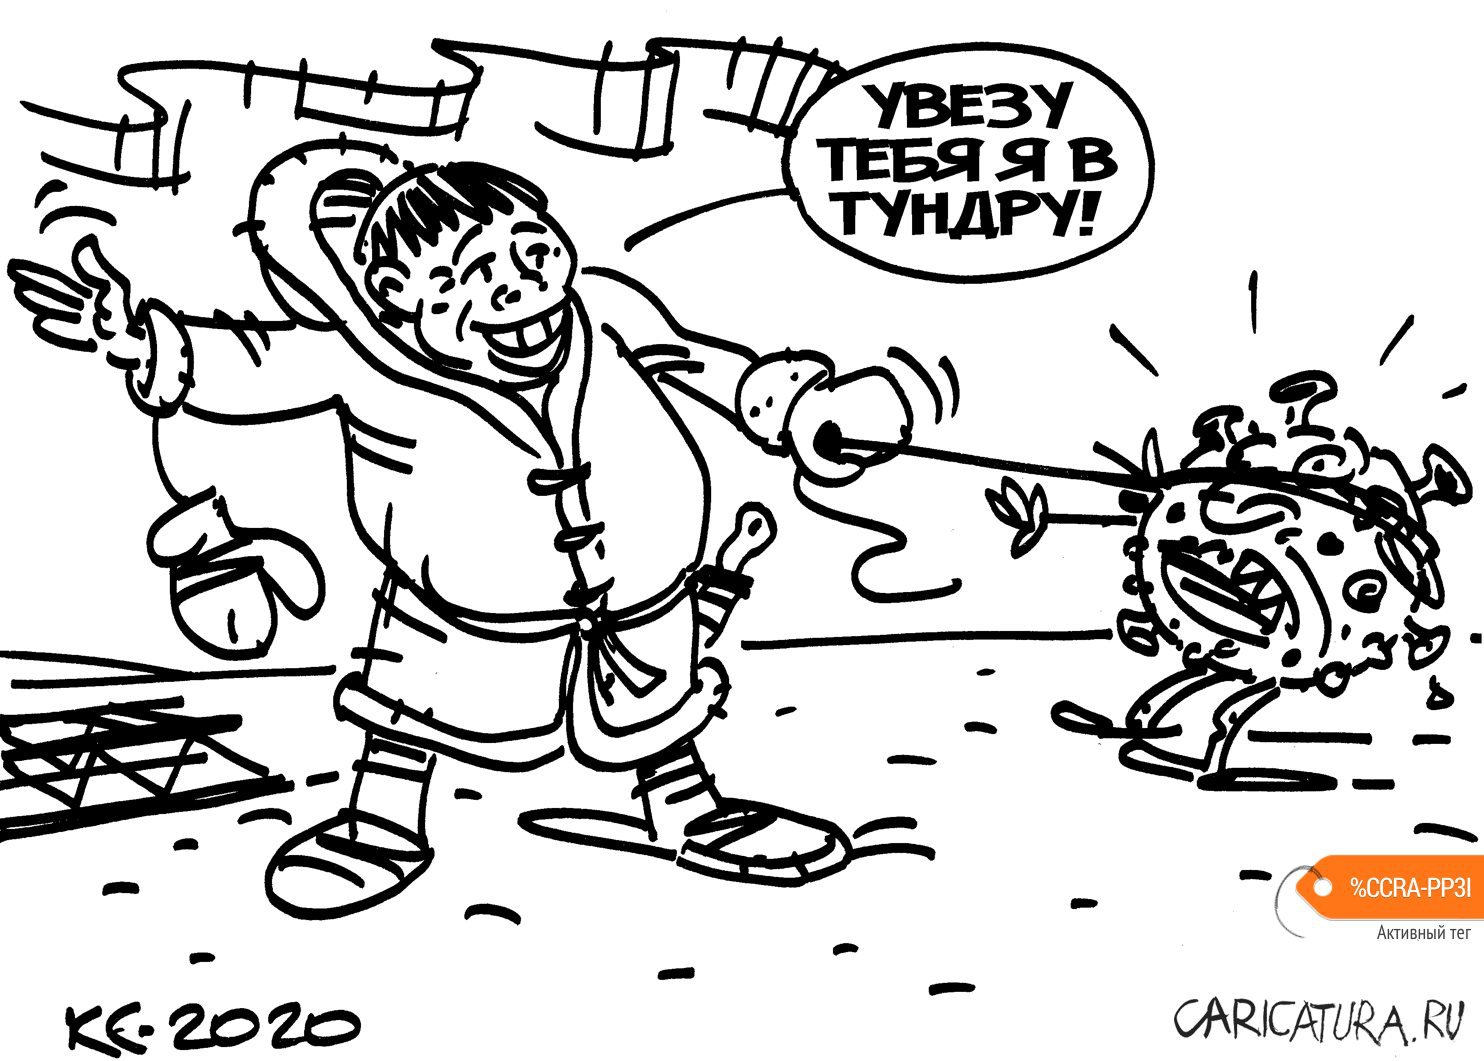 Карикатура "Увезу тебя я в тундру!", Вячеслав Капрельянц